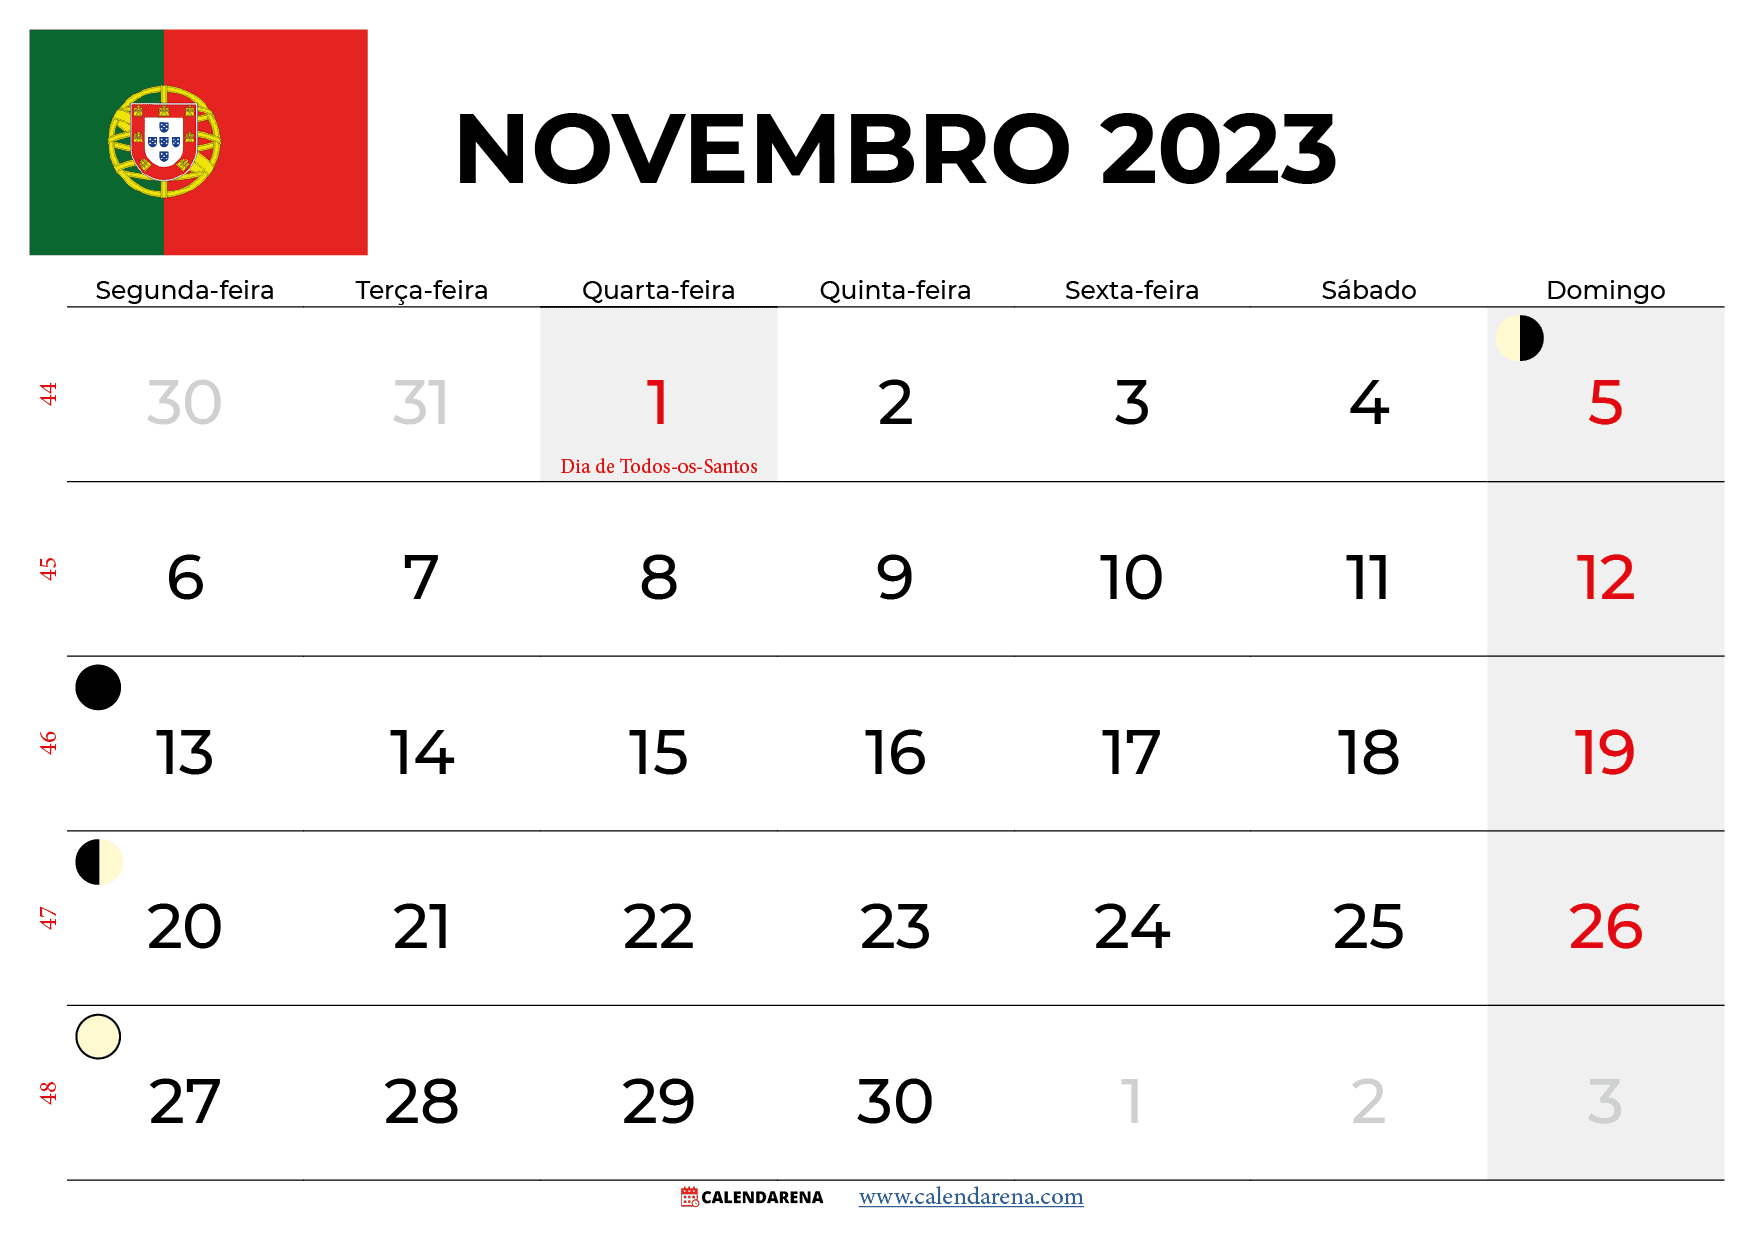 Calendario Novembro 2023 imprimir portugal